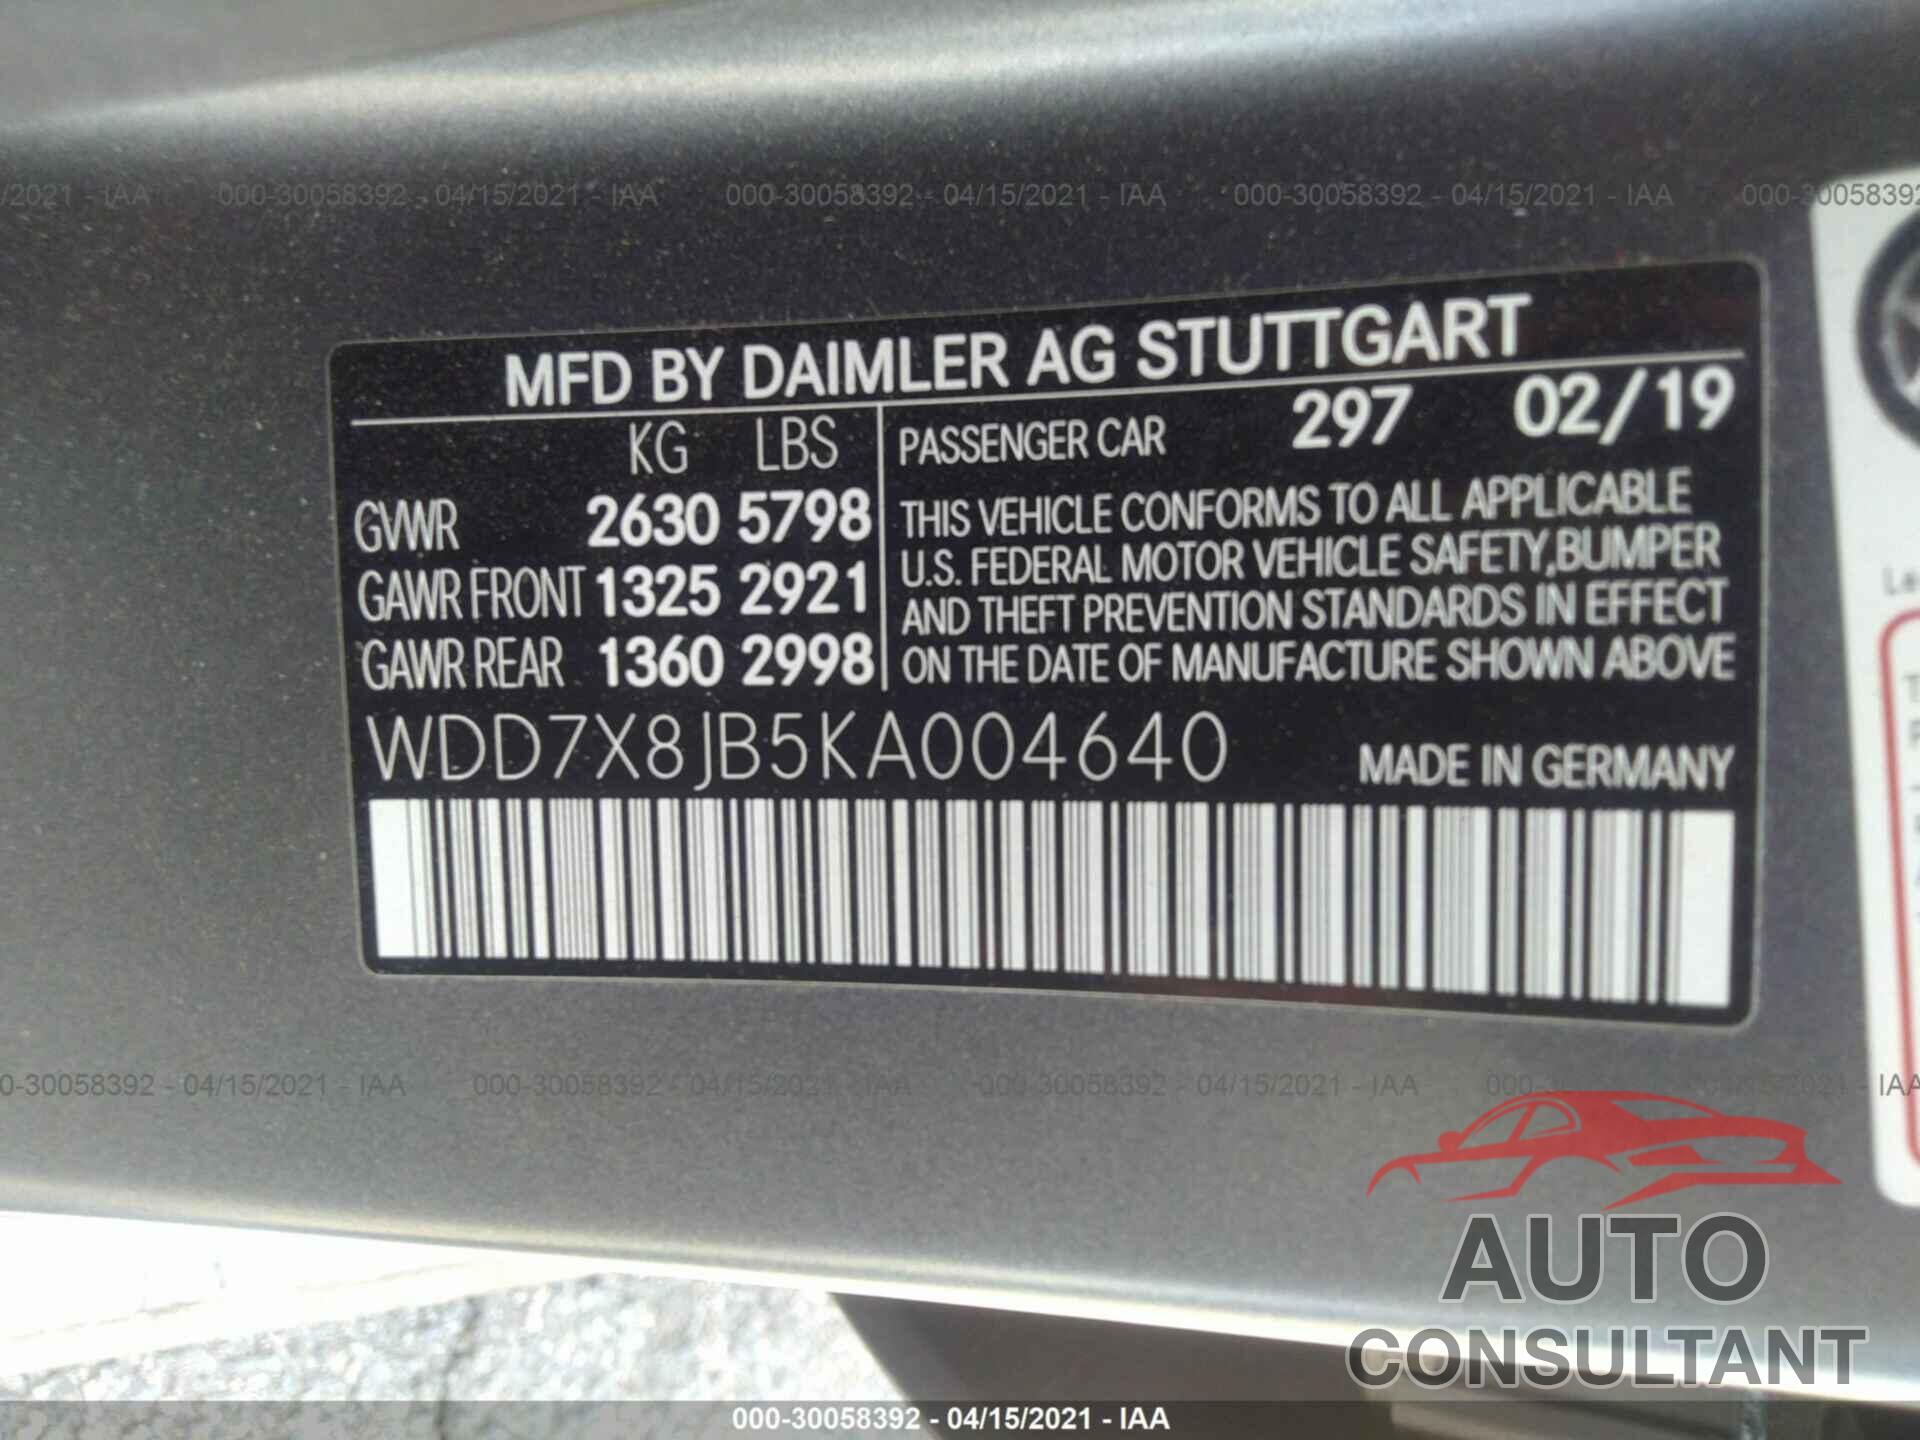 MERCEDES-BENZ AMG GT 2019 - WDD7X8JB5KA004640